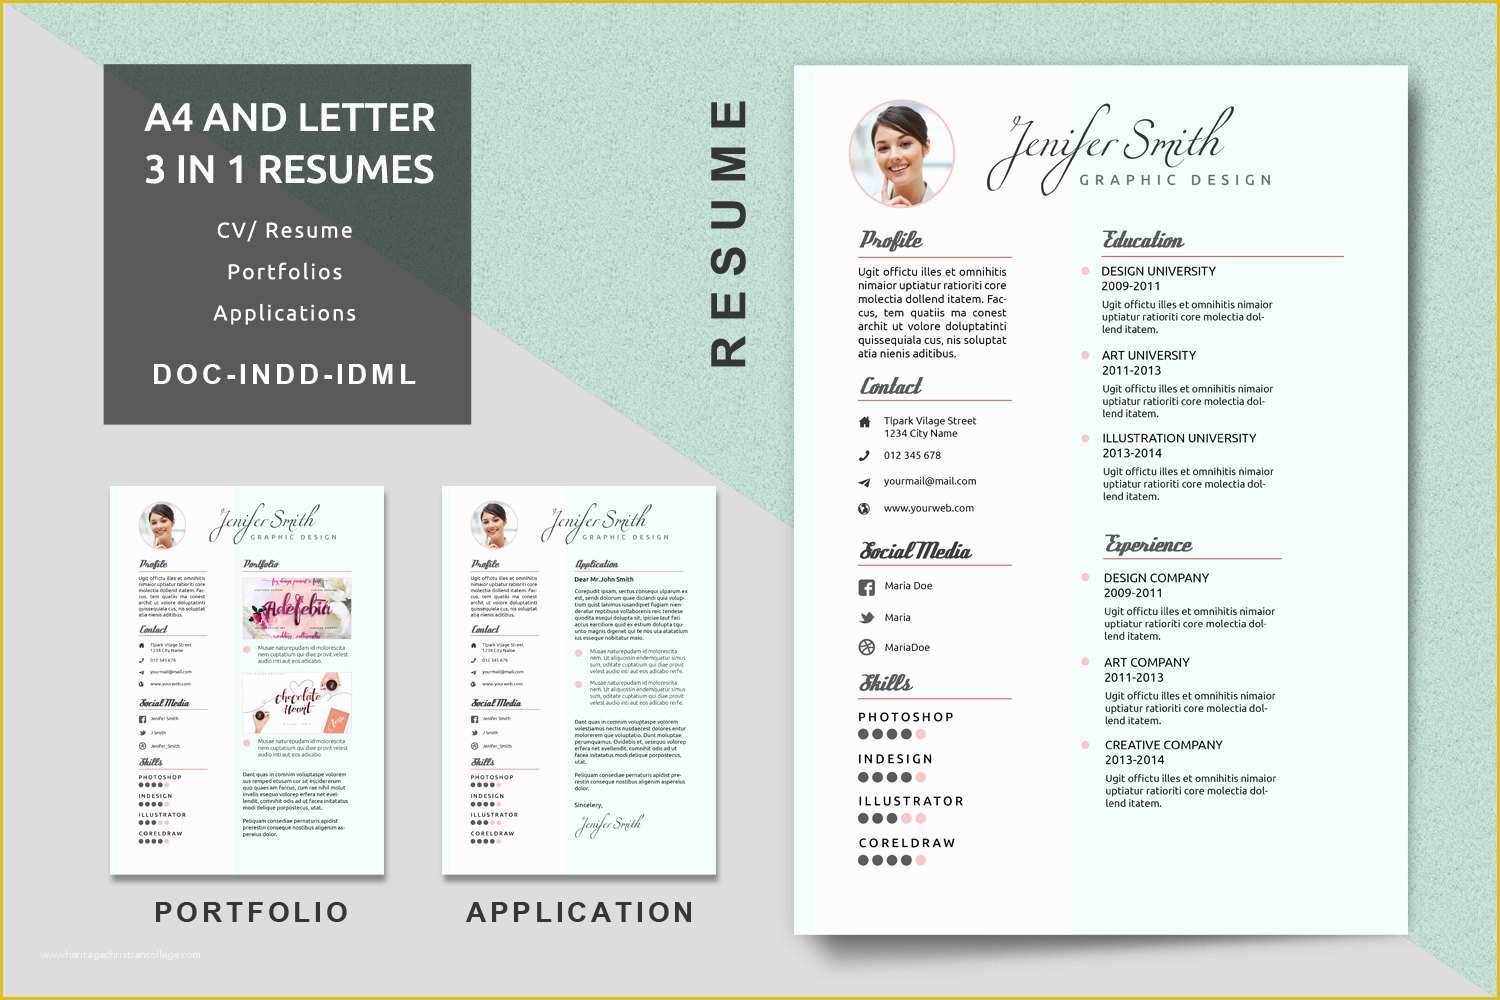 Resume Portfolio Template Free Of A4 Letter Creative Resume Templates Modern Resume Cv